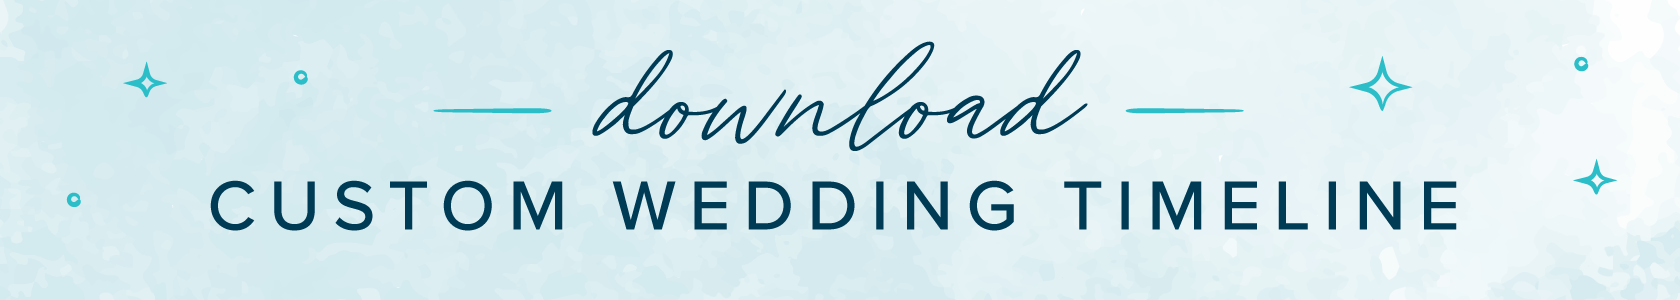 wedding reception timeline printable button